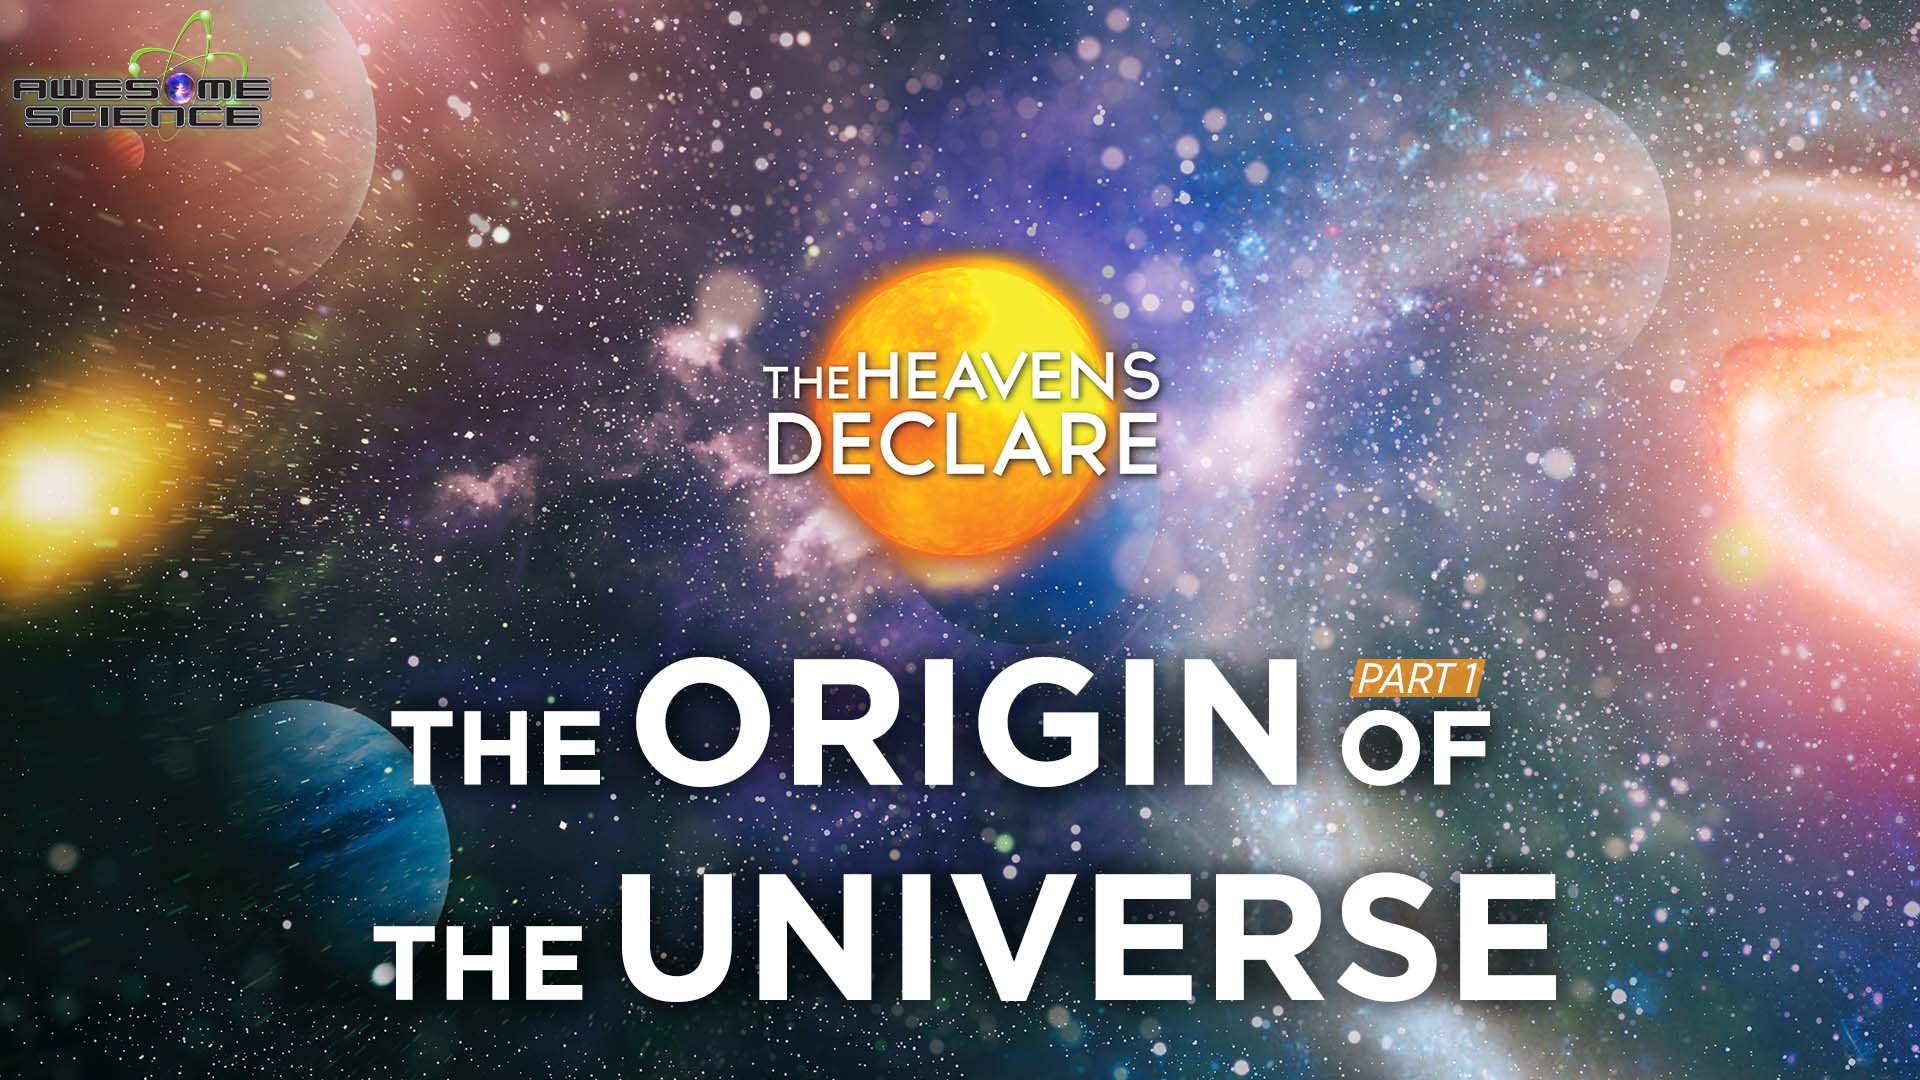 “The Heavens Declare